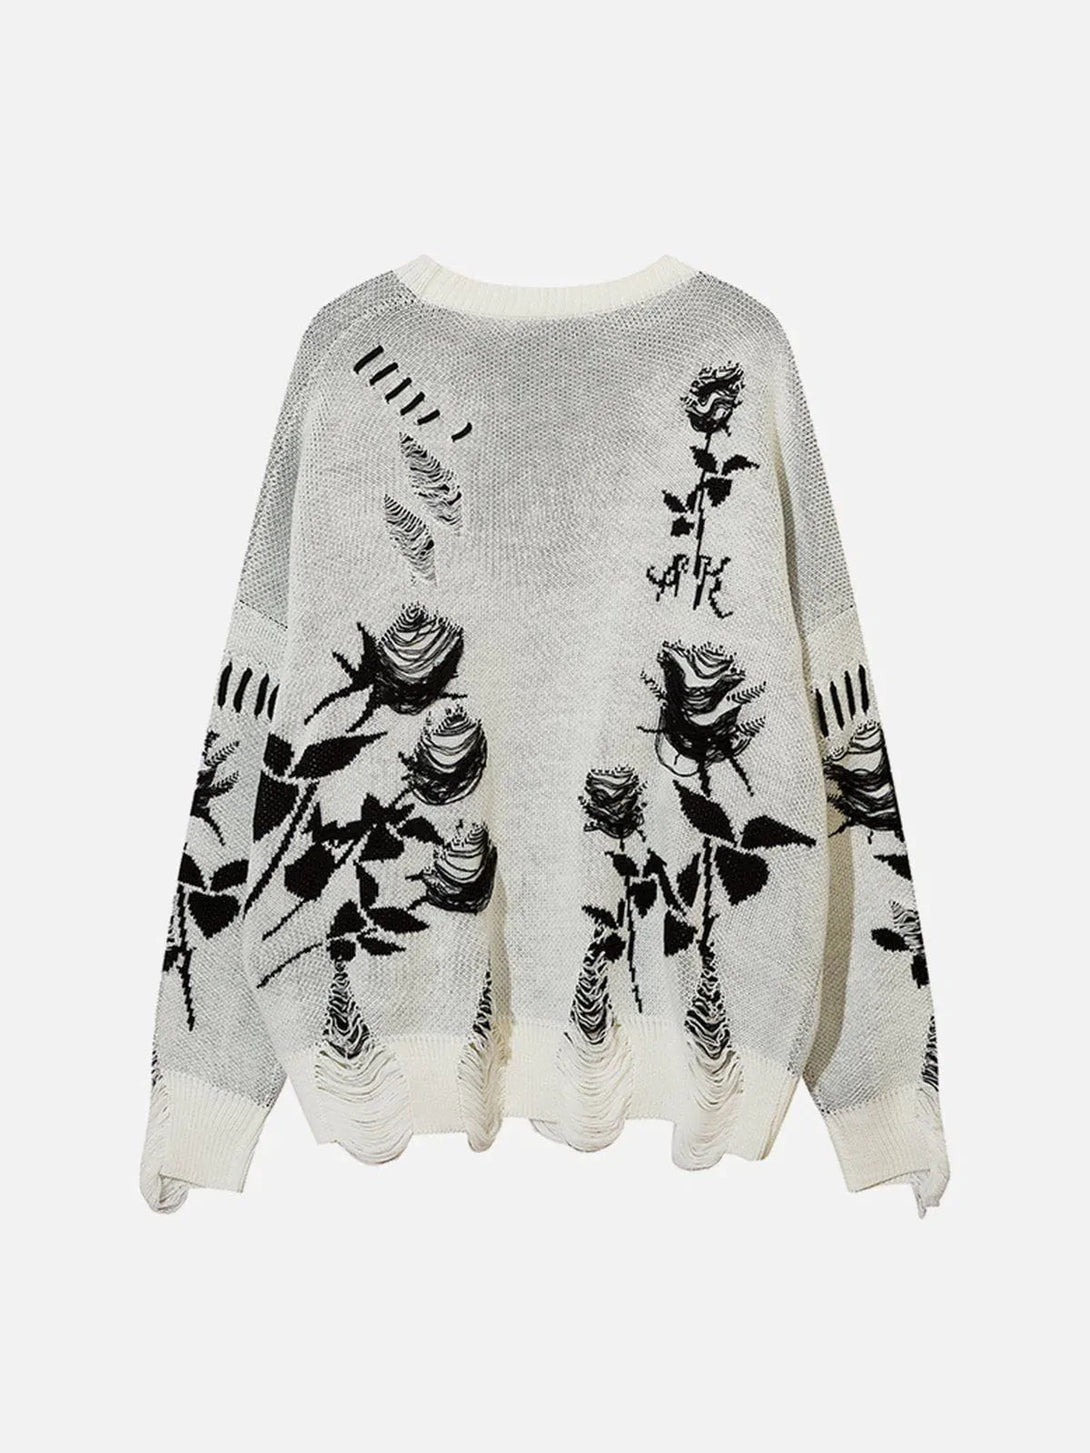 Majesda® - Raw Edge Rose Sweater outfit ideas streetwear fashion